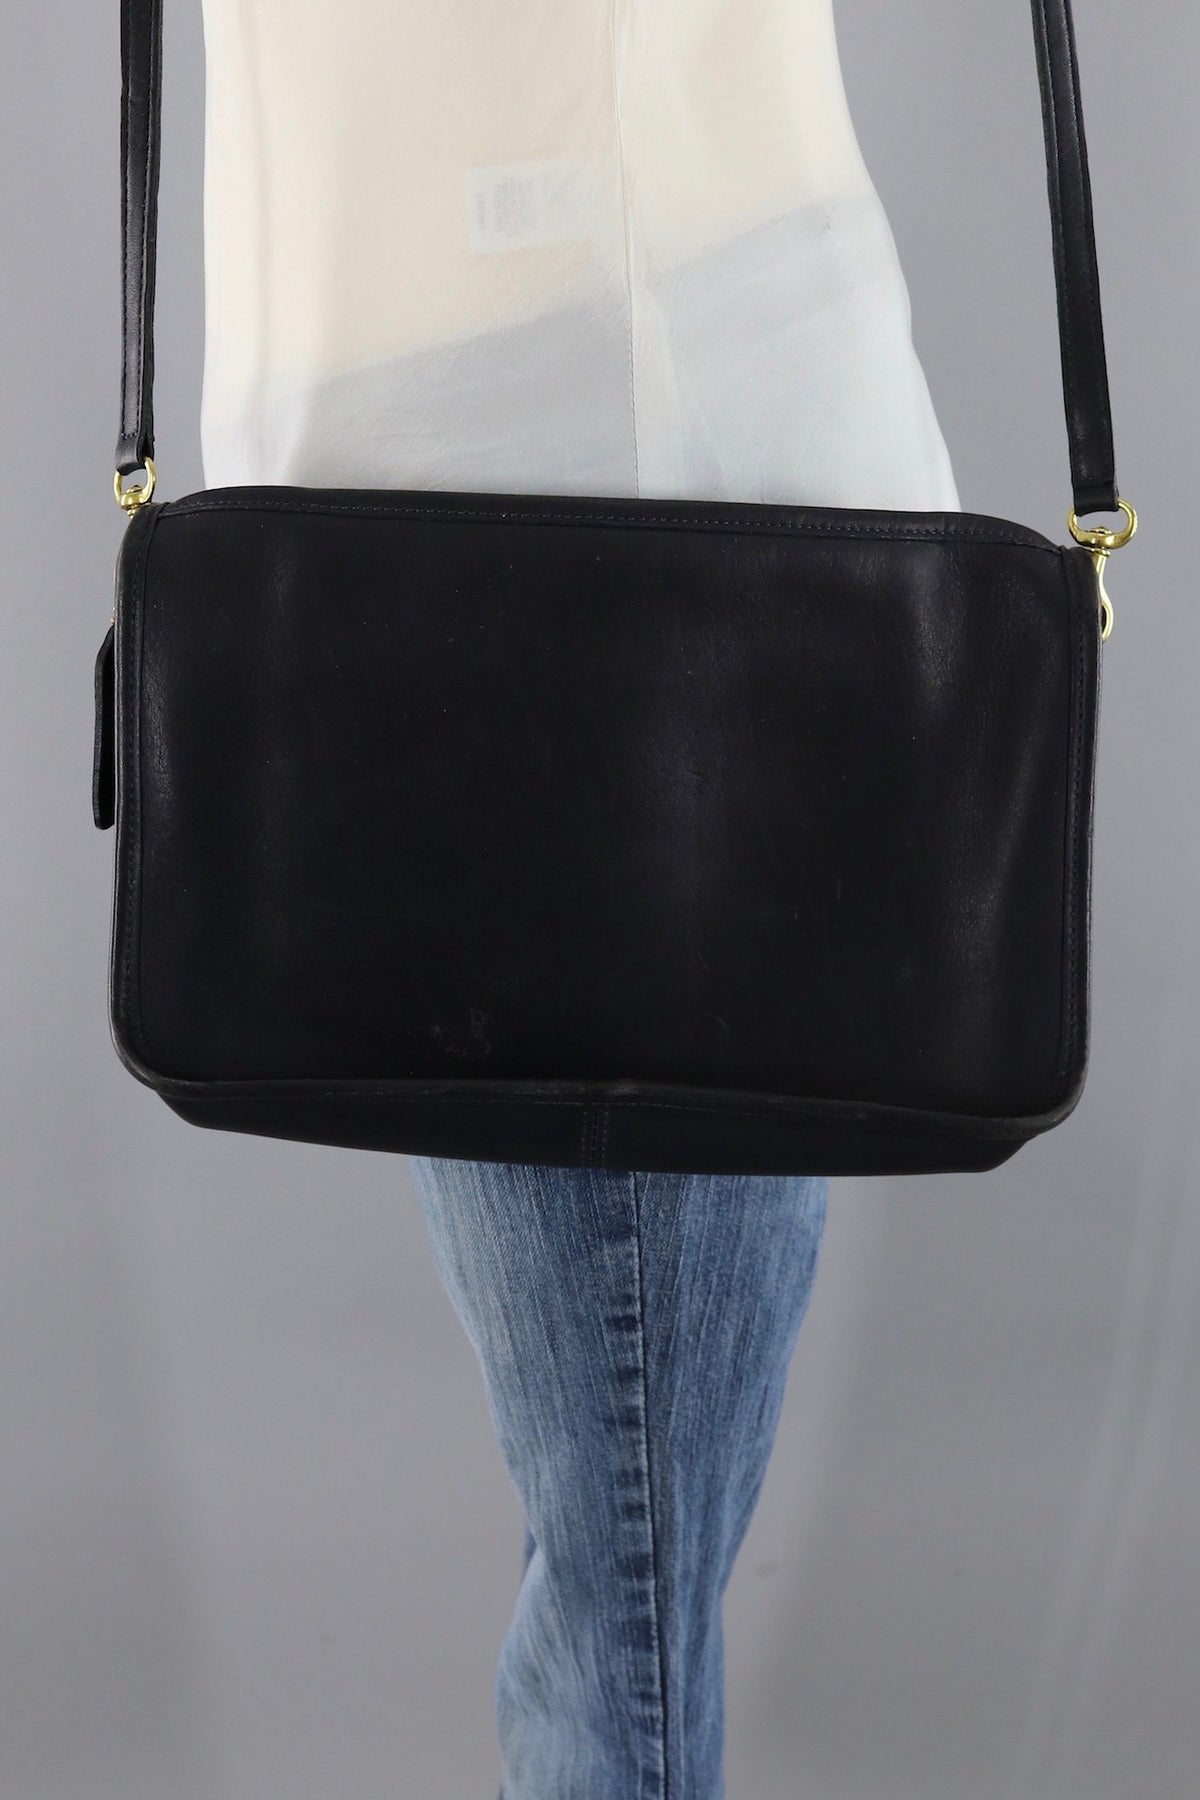 Cream Leather Coach handbag purse/satchel - Bags & Luggage - Spring, Texas  | Facebook Marketplace | Facebook